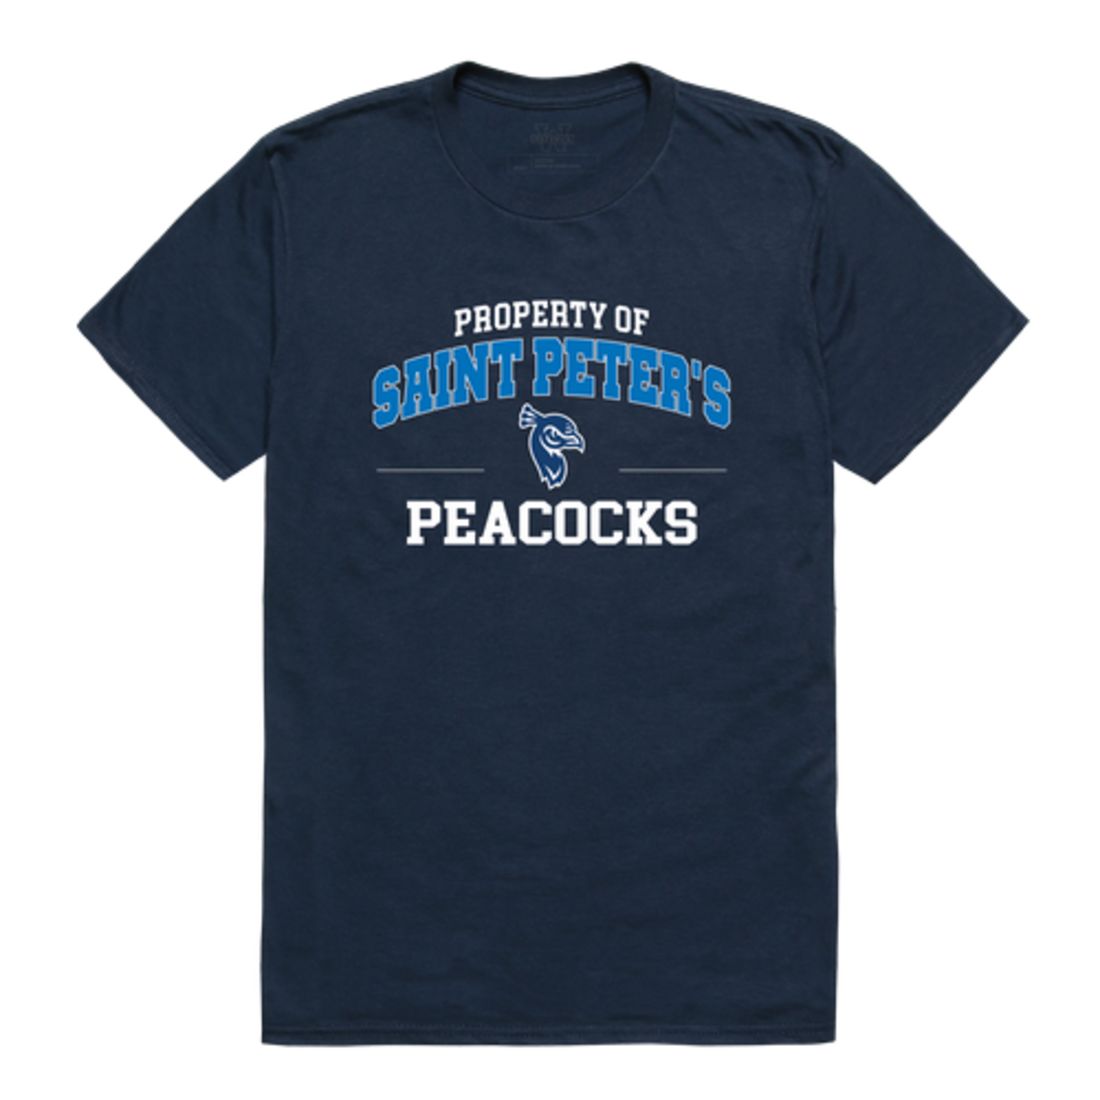 Saint Peter's University Peacocks Property T-Shirt Tee